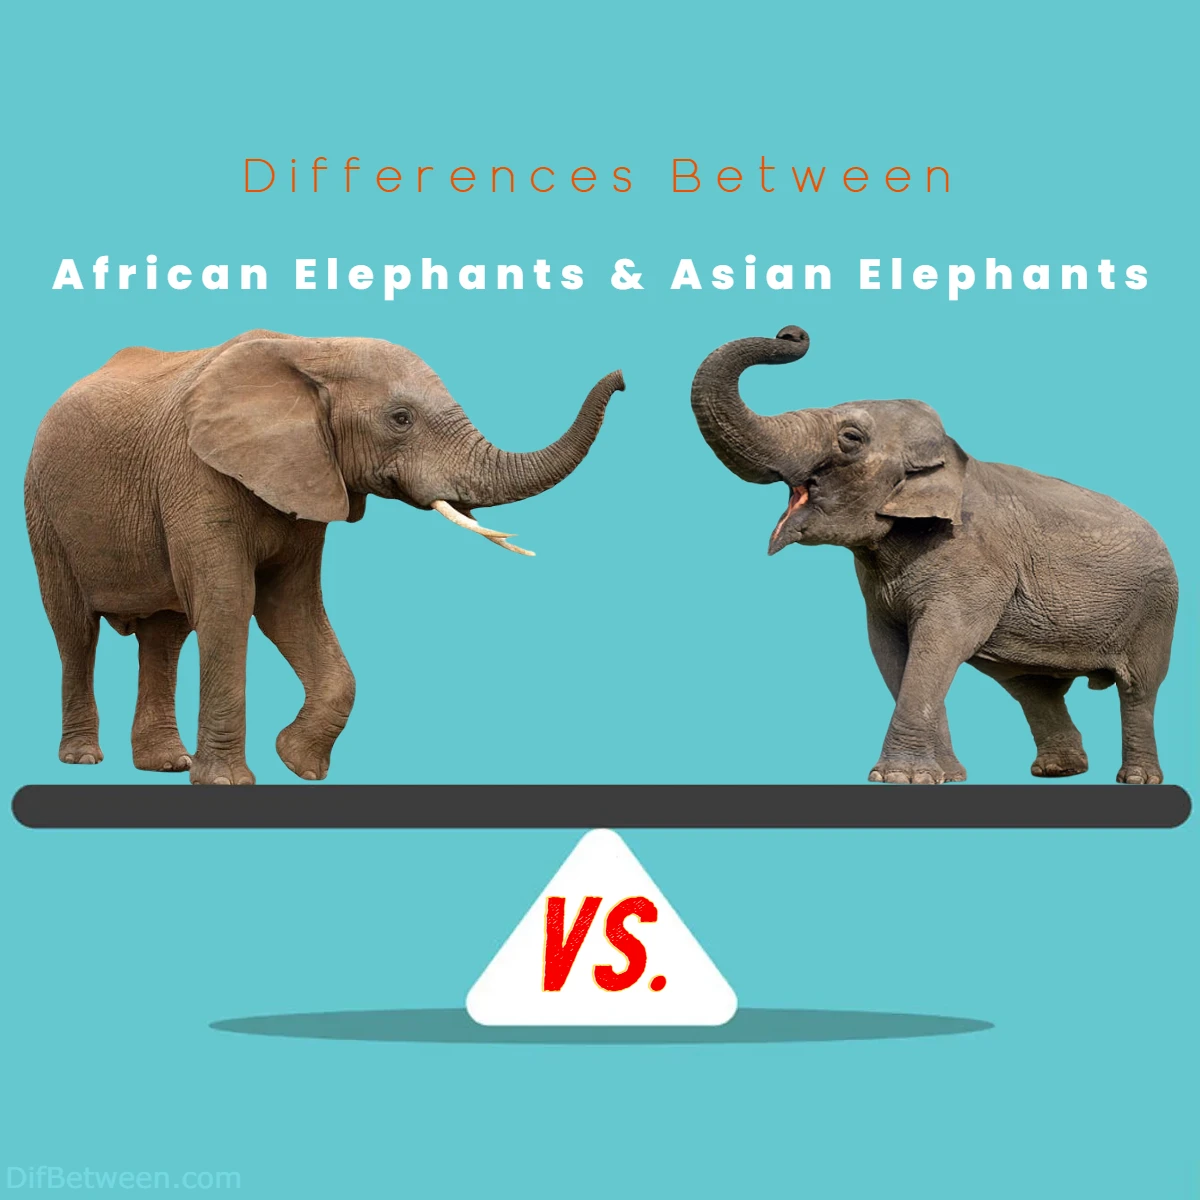 Differences Between African Elephants vs Asian Elephants